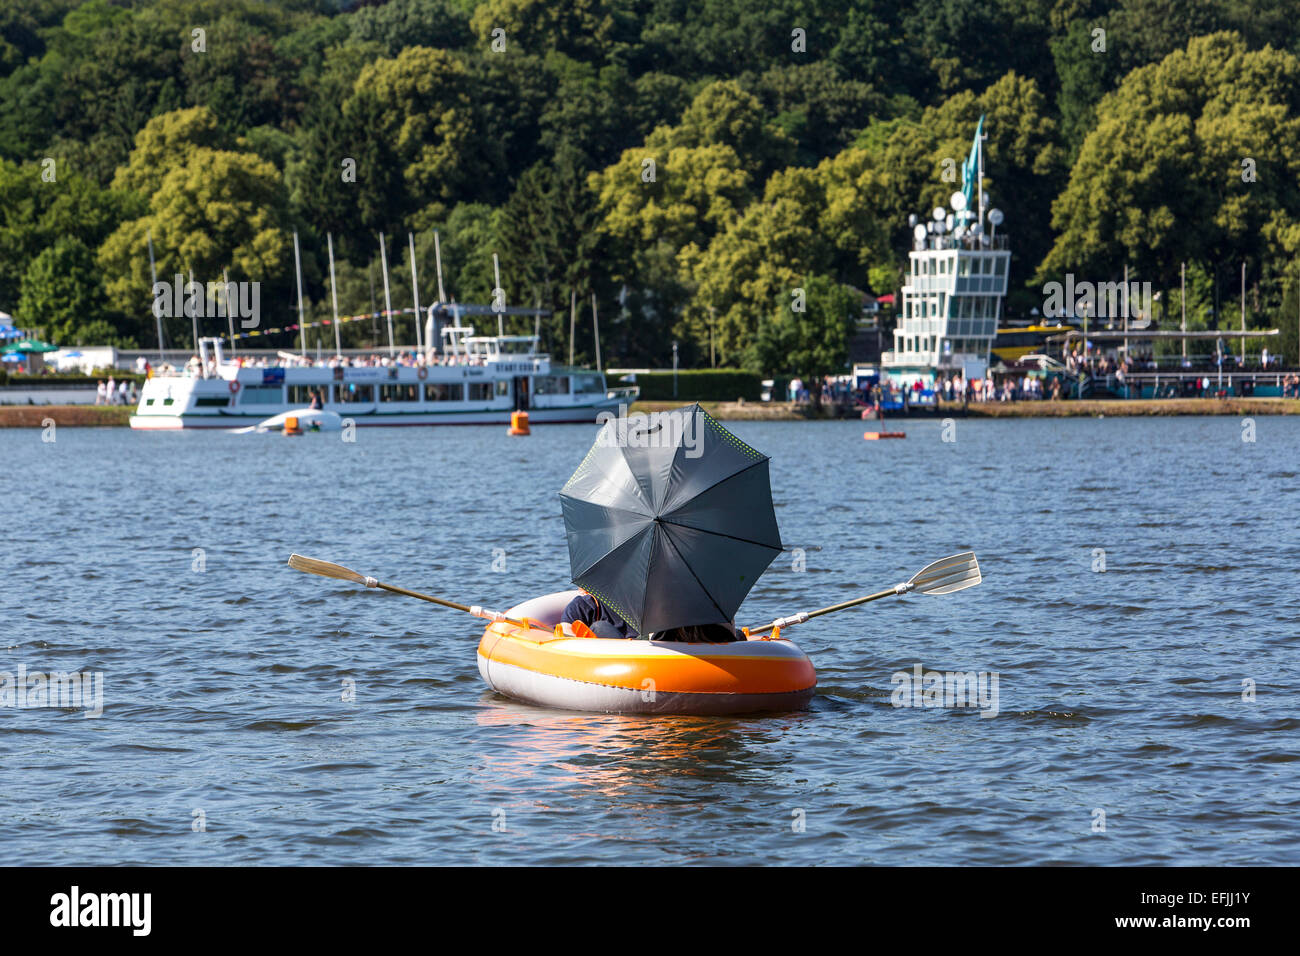 People in a rubber boat, with umbrella, sun bathing, enjoying summer on 'Baldeneysee' lake, Essen, Germany, Stock Photo